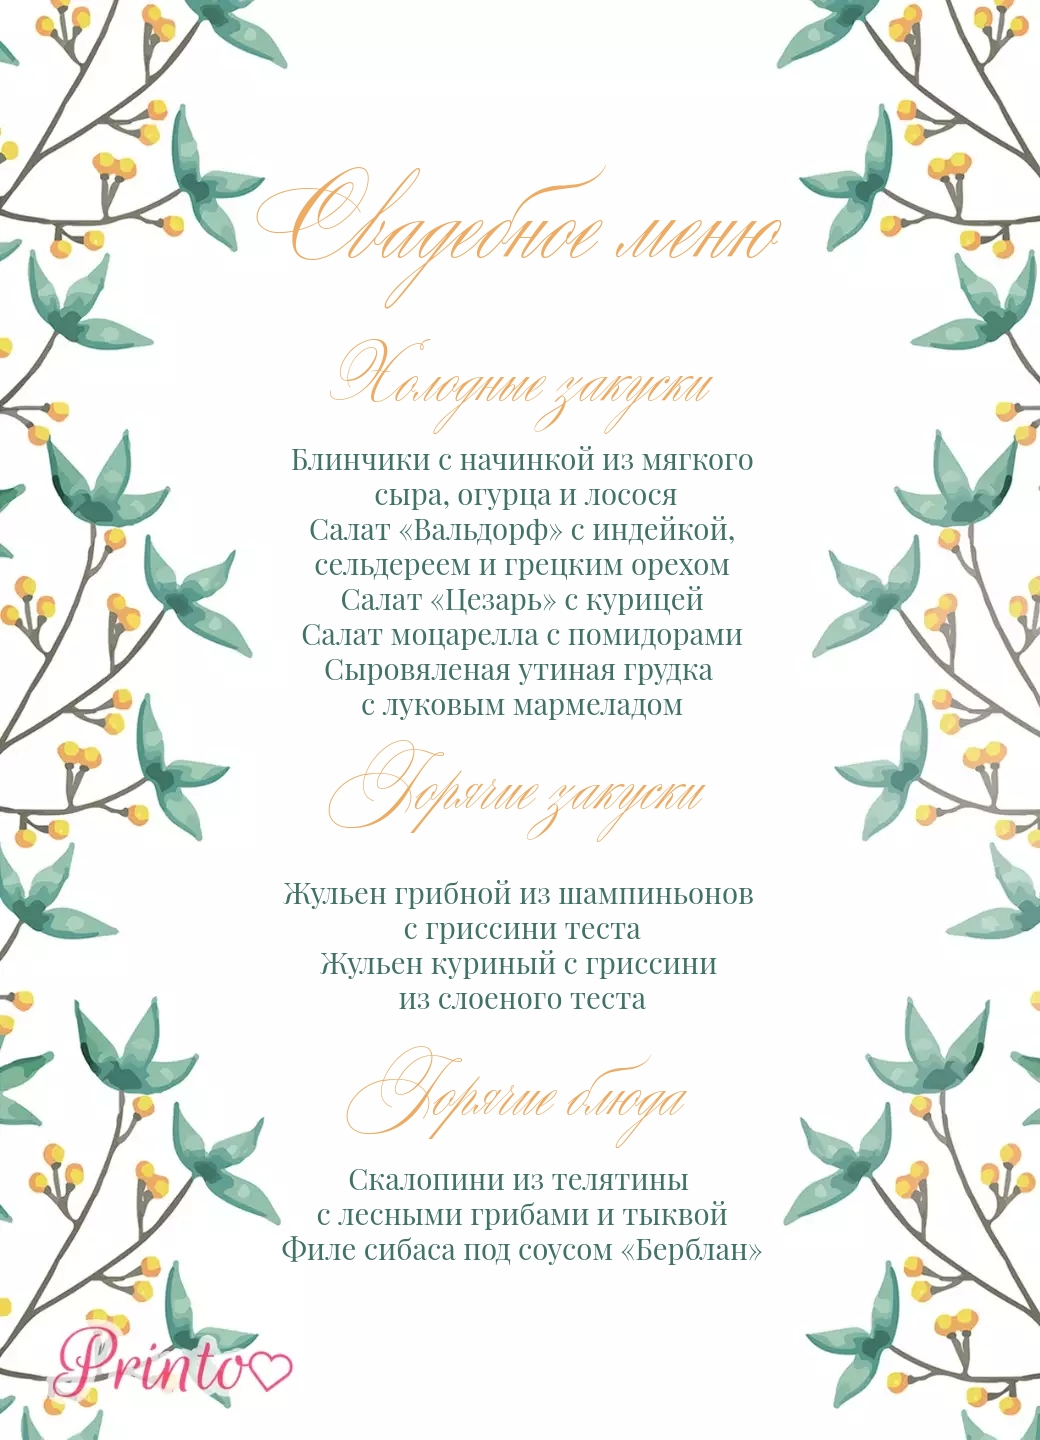 Шаблон свадебного меню "Вишневый сад"